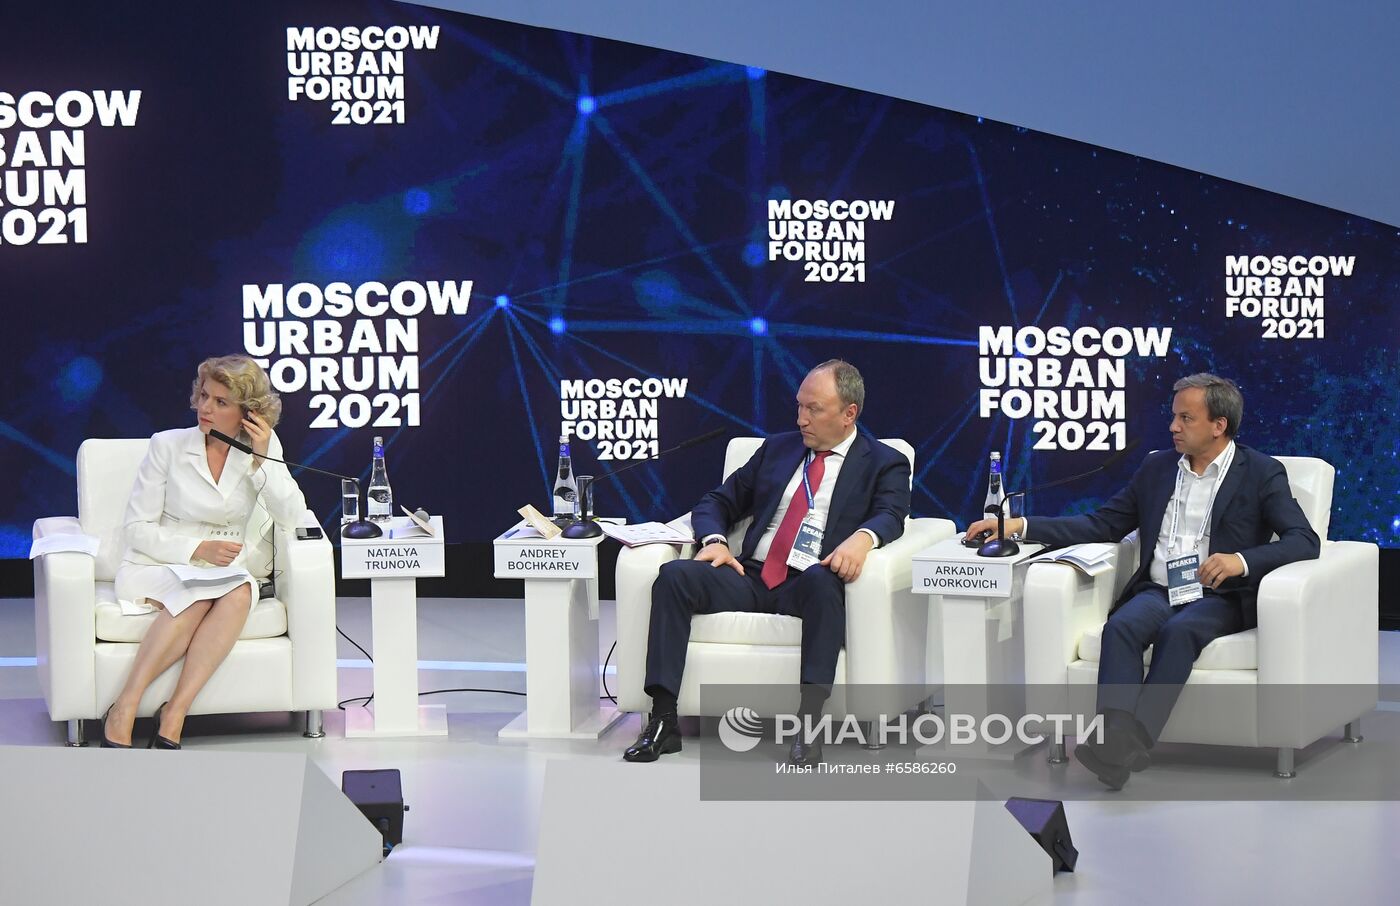 Moscow Urban Forum 2021